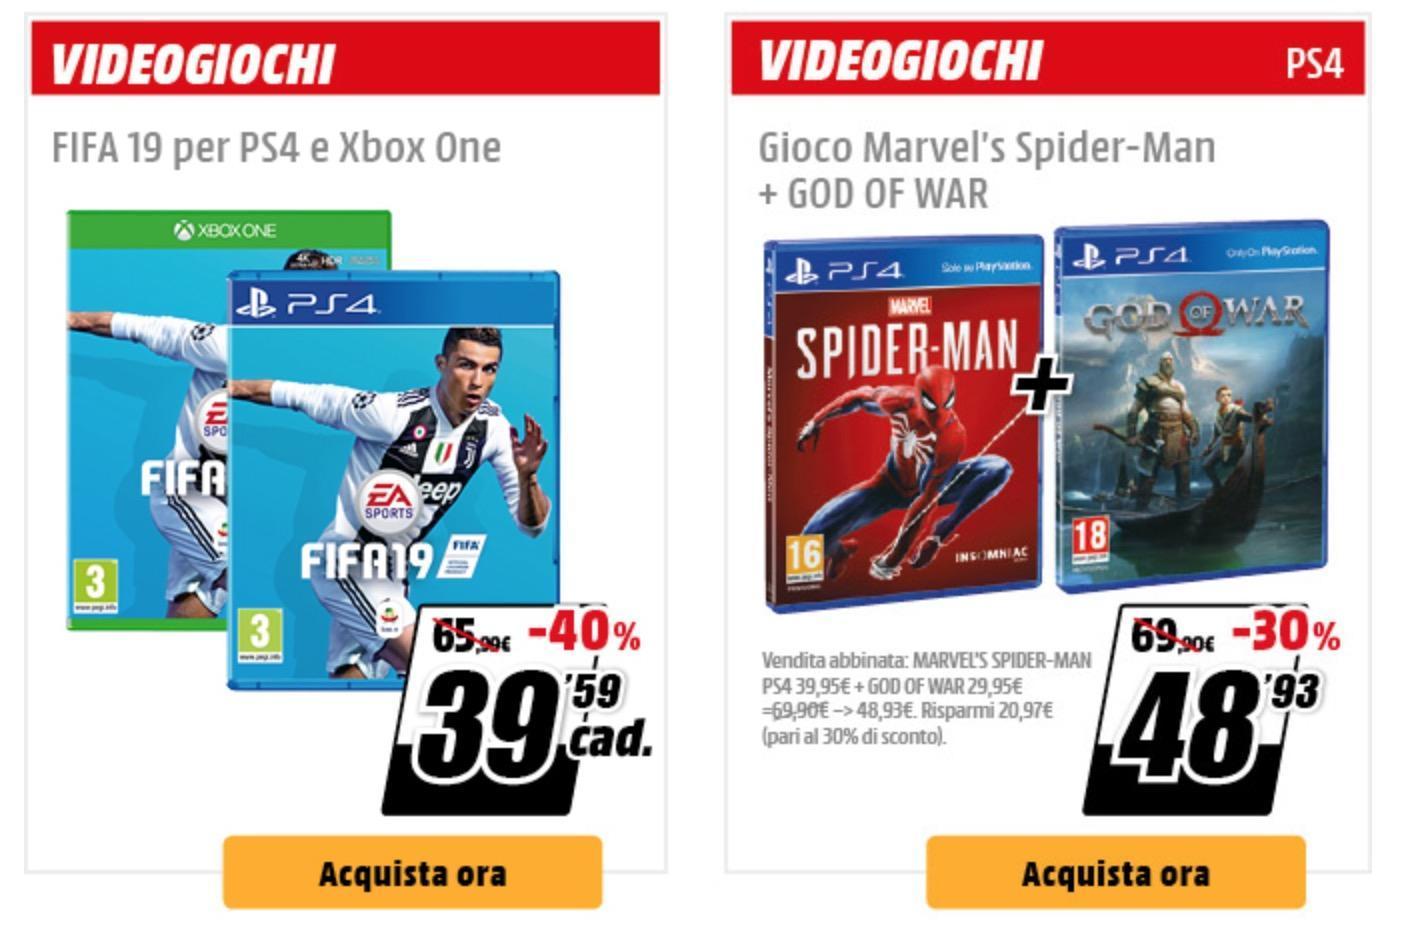 FIFA 19 PS4 Spyder-Man e GOD OF WAR